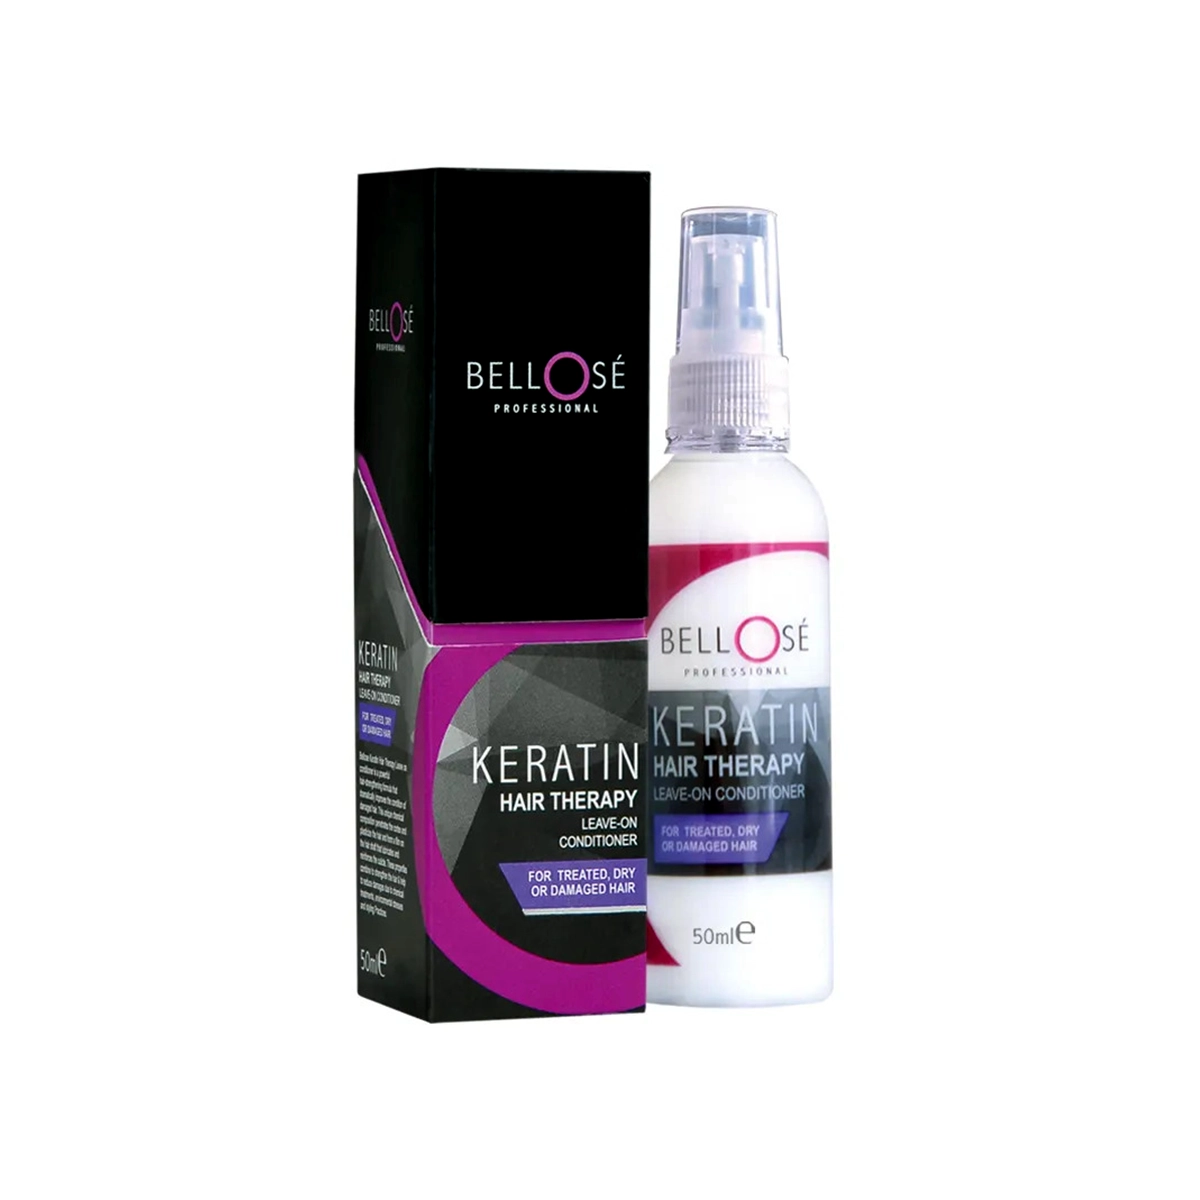 Bellose Keratin Hair Therapy 50ml